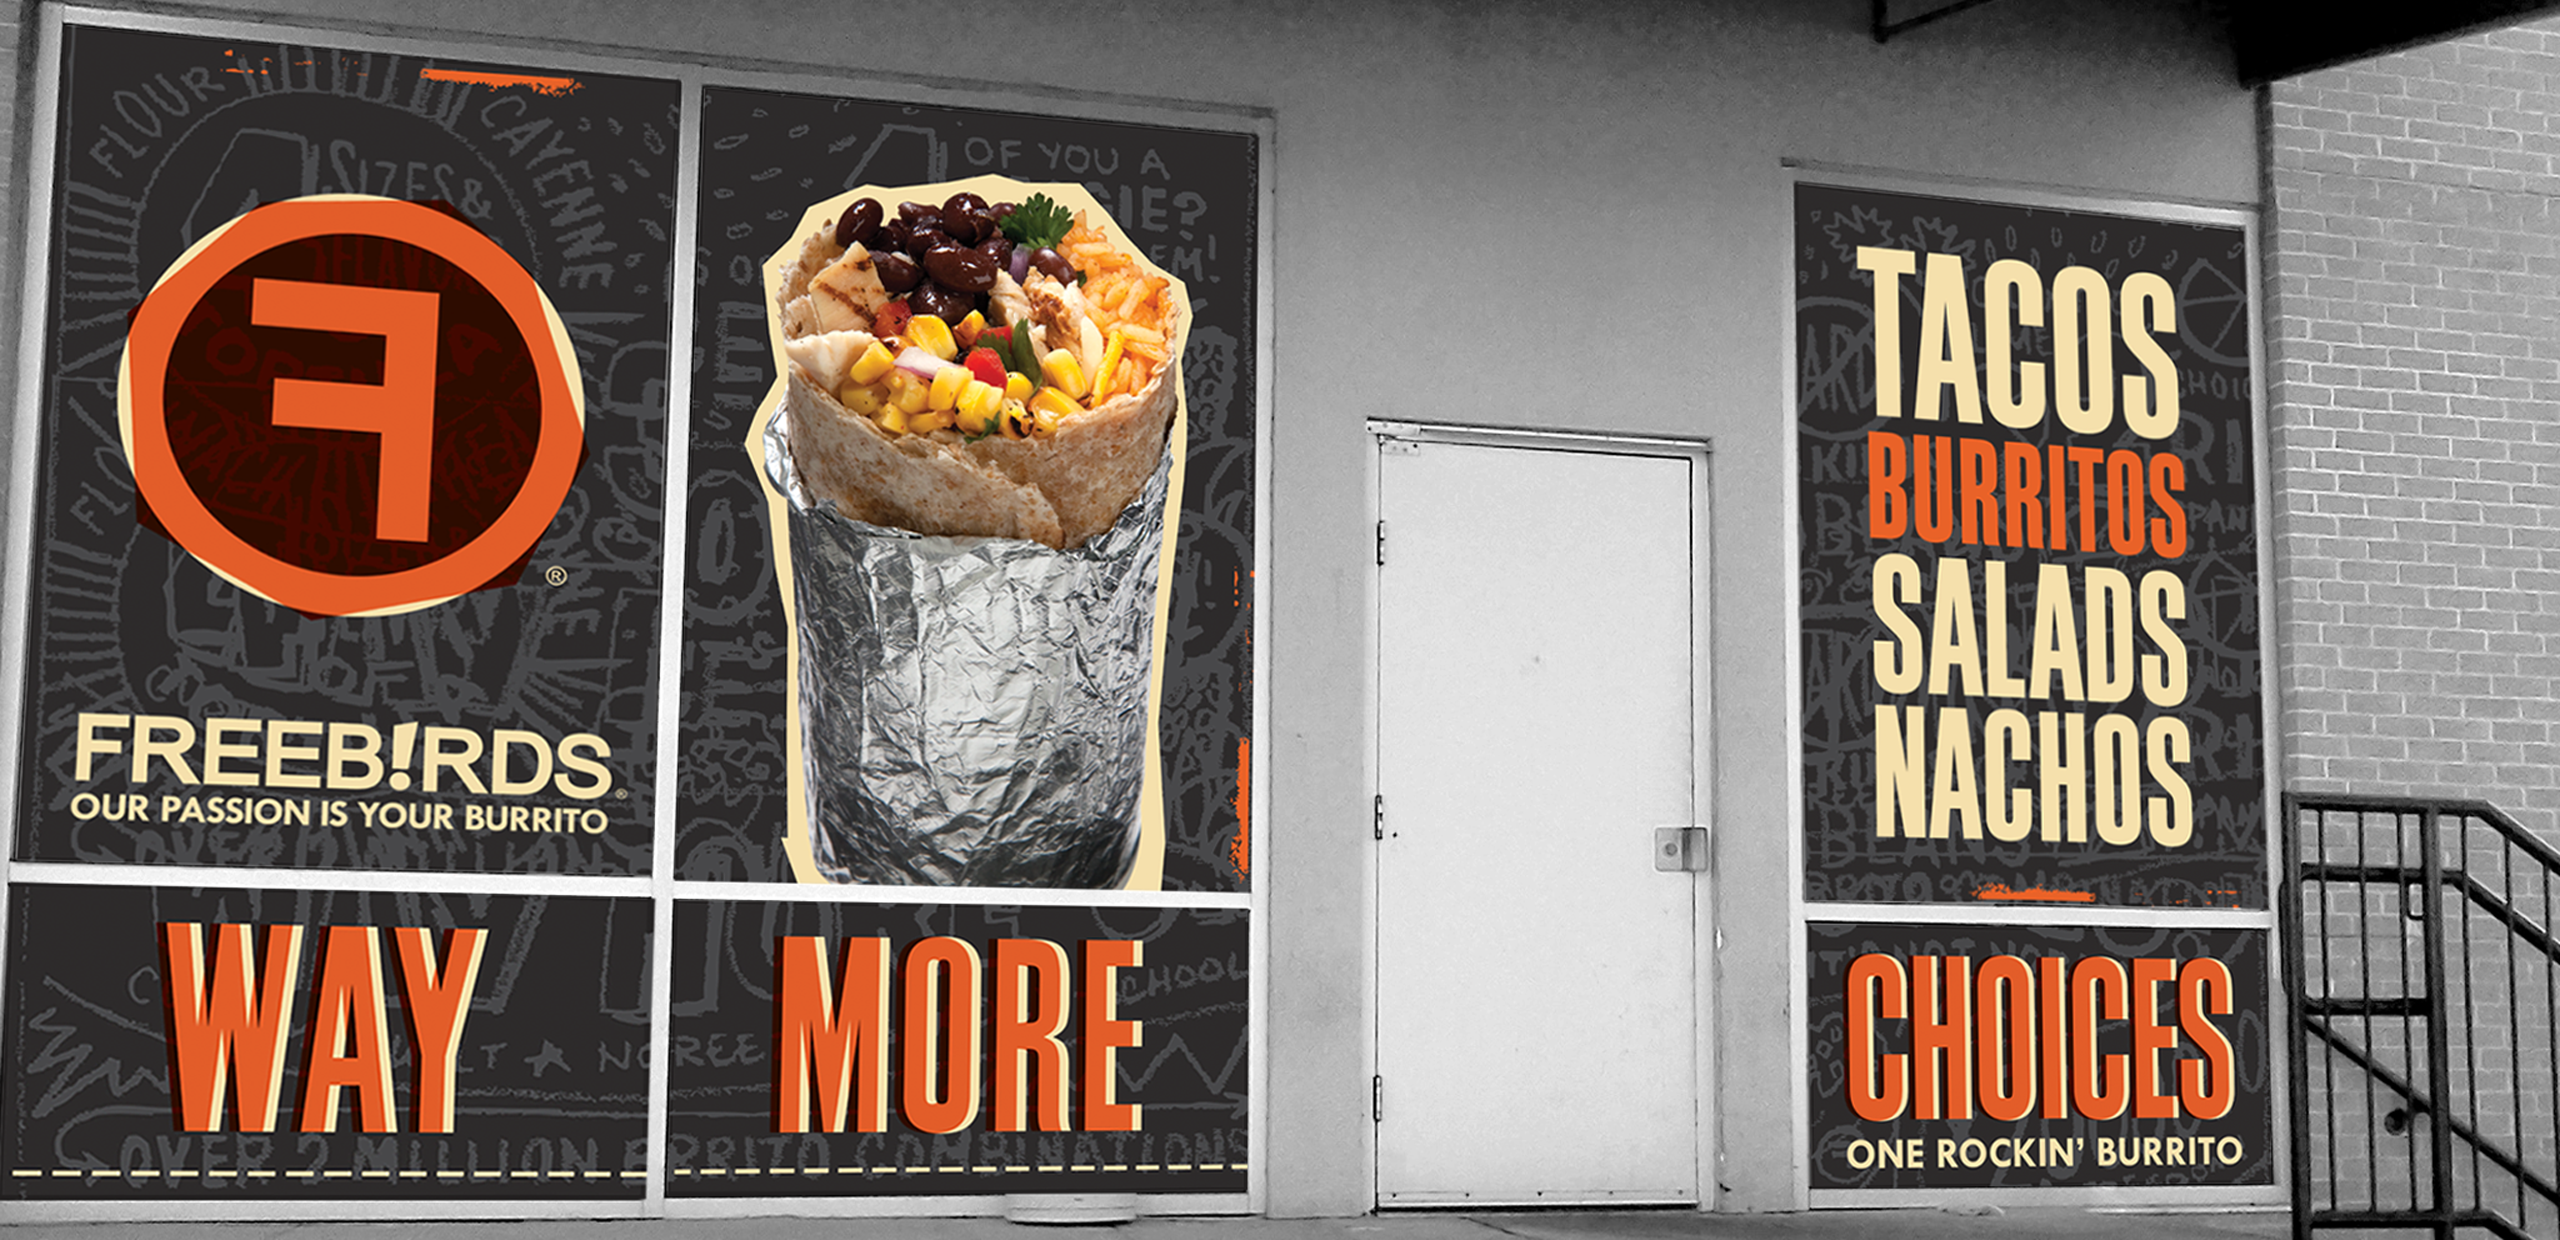 Freebirds World Burrito Window Display & Advertising